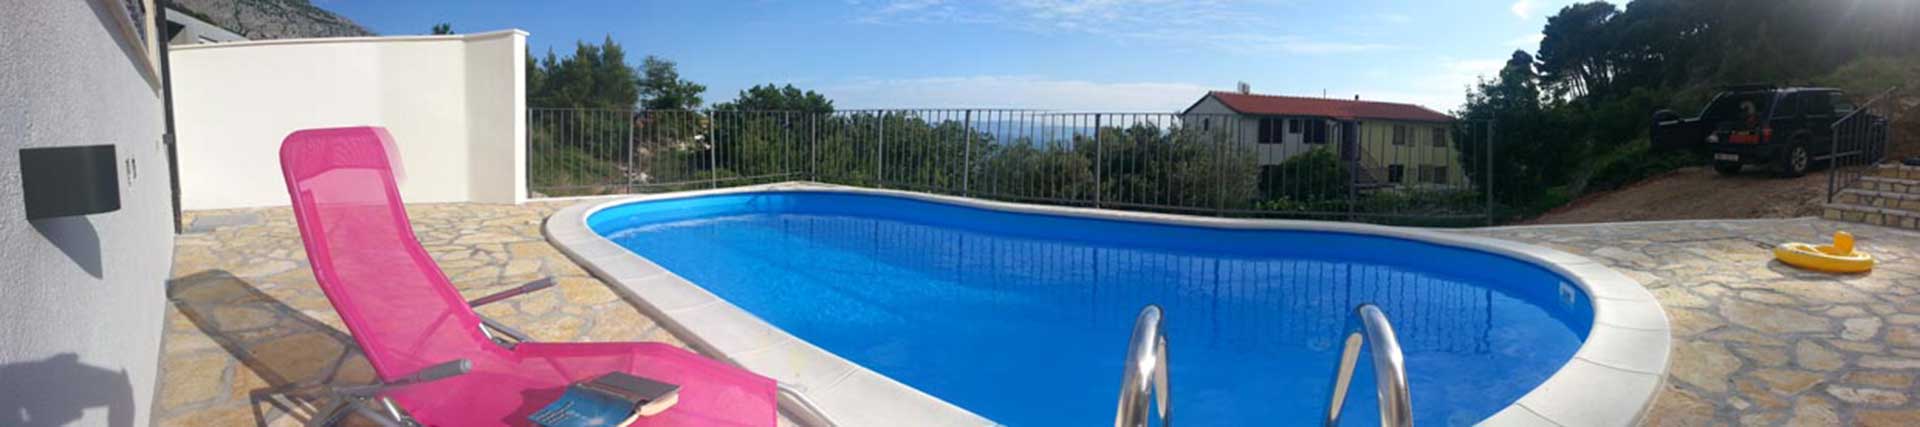 Holiday house with pool for rent, Makarska - Villa Natasha